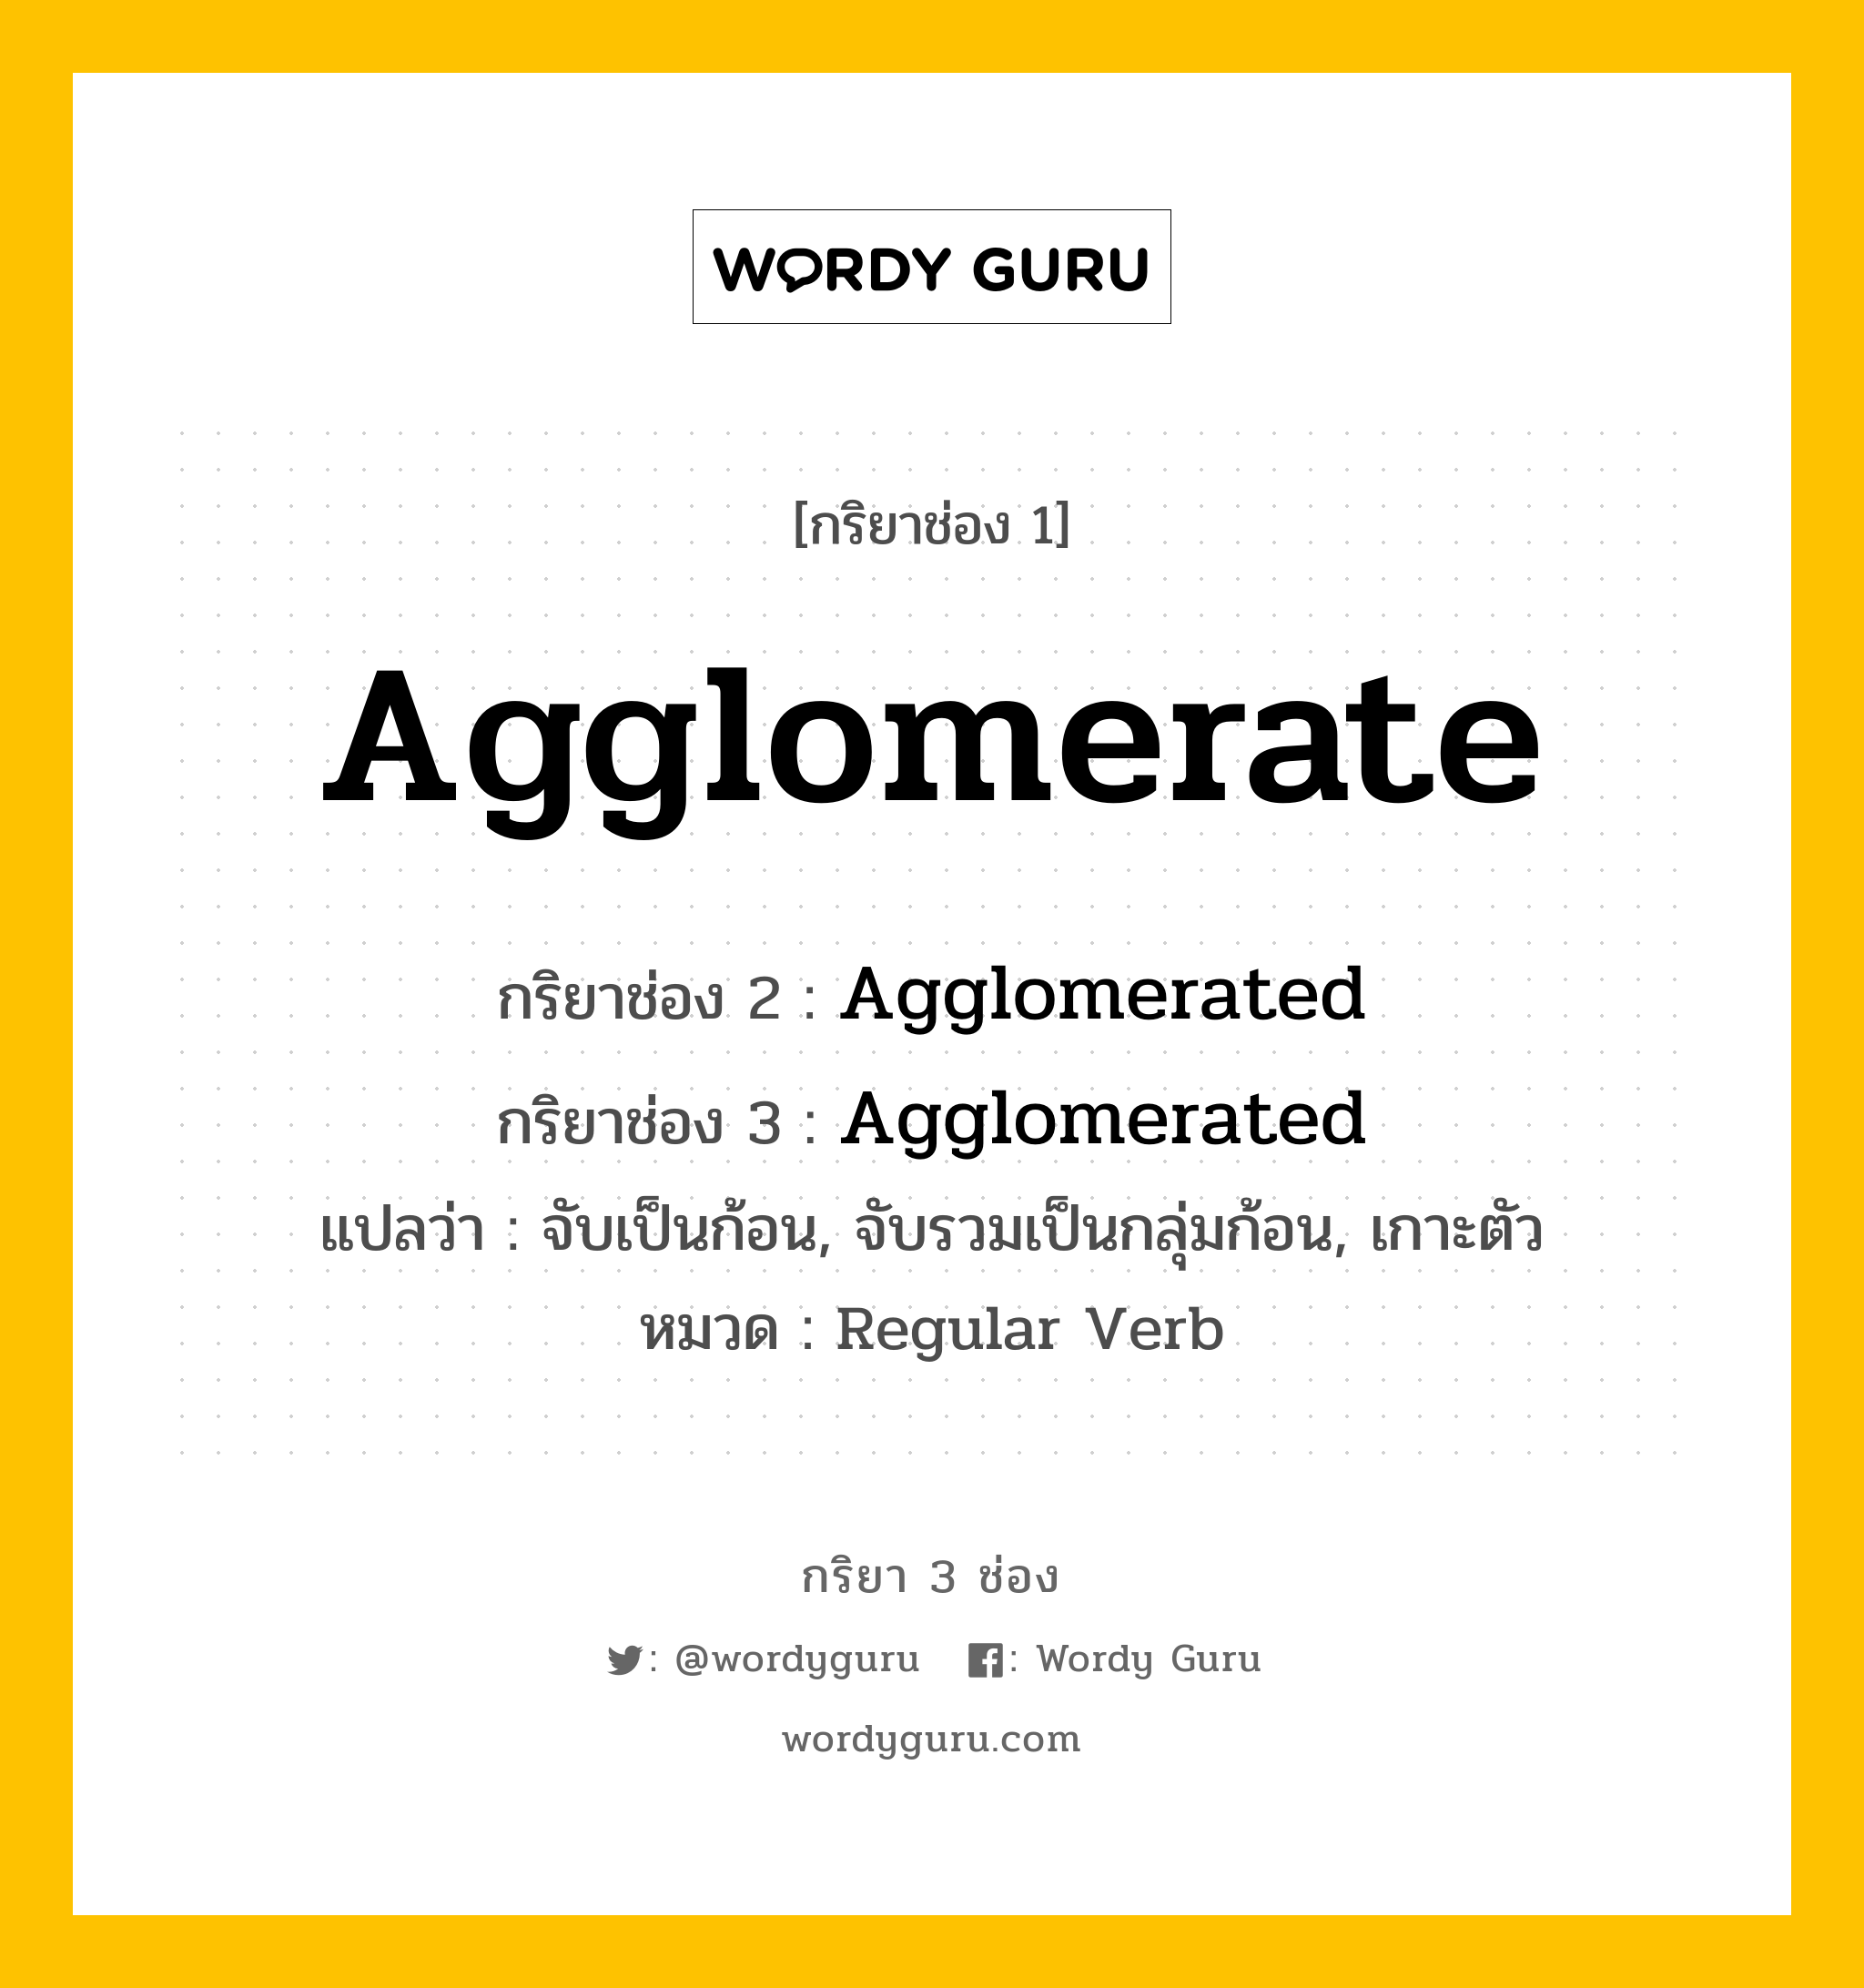 Agglomerate มีกริยา 3 ช่องอะไรบ้าง? คำศัพท์ในกลุ่มประเภท Regular Verb, กริยาช่อง 1 Agglomerate กริยาช่อง 2 Agglomerated กริยาช่อง 3 Agglomerated แปลว่า จับเป็นก้อน, จับรวมเป็นกลุ่มก้อน, เกาะตัว หมวด Regular Verb หมวด Regular Verb